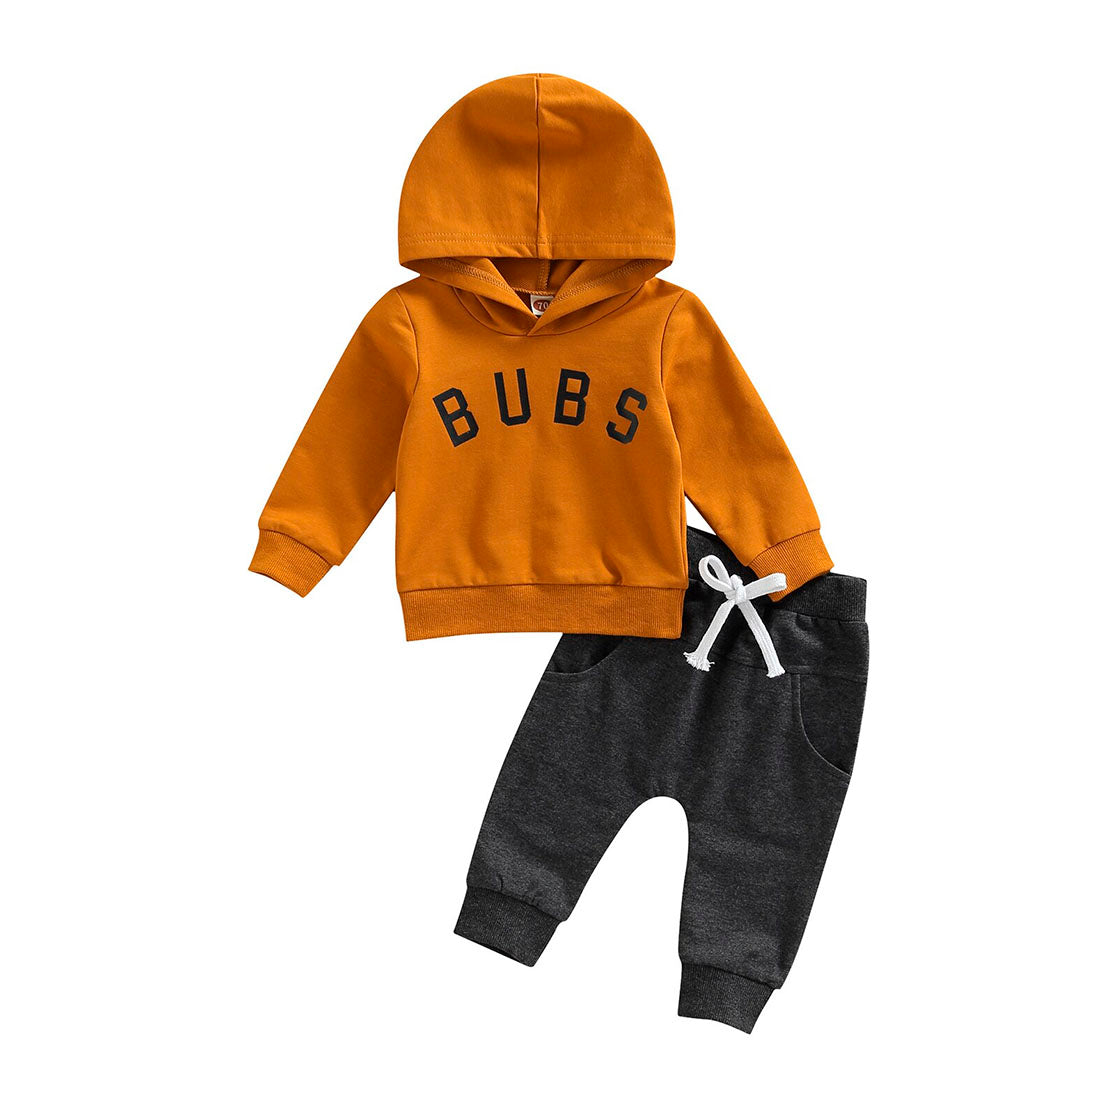 Bubs Hooded Baby Set